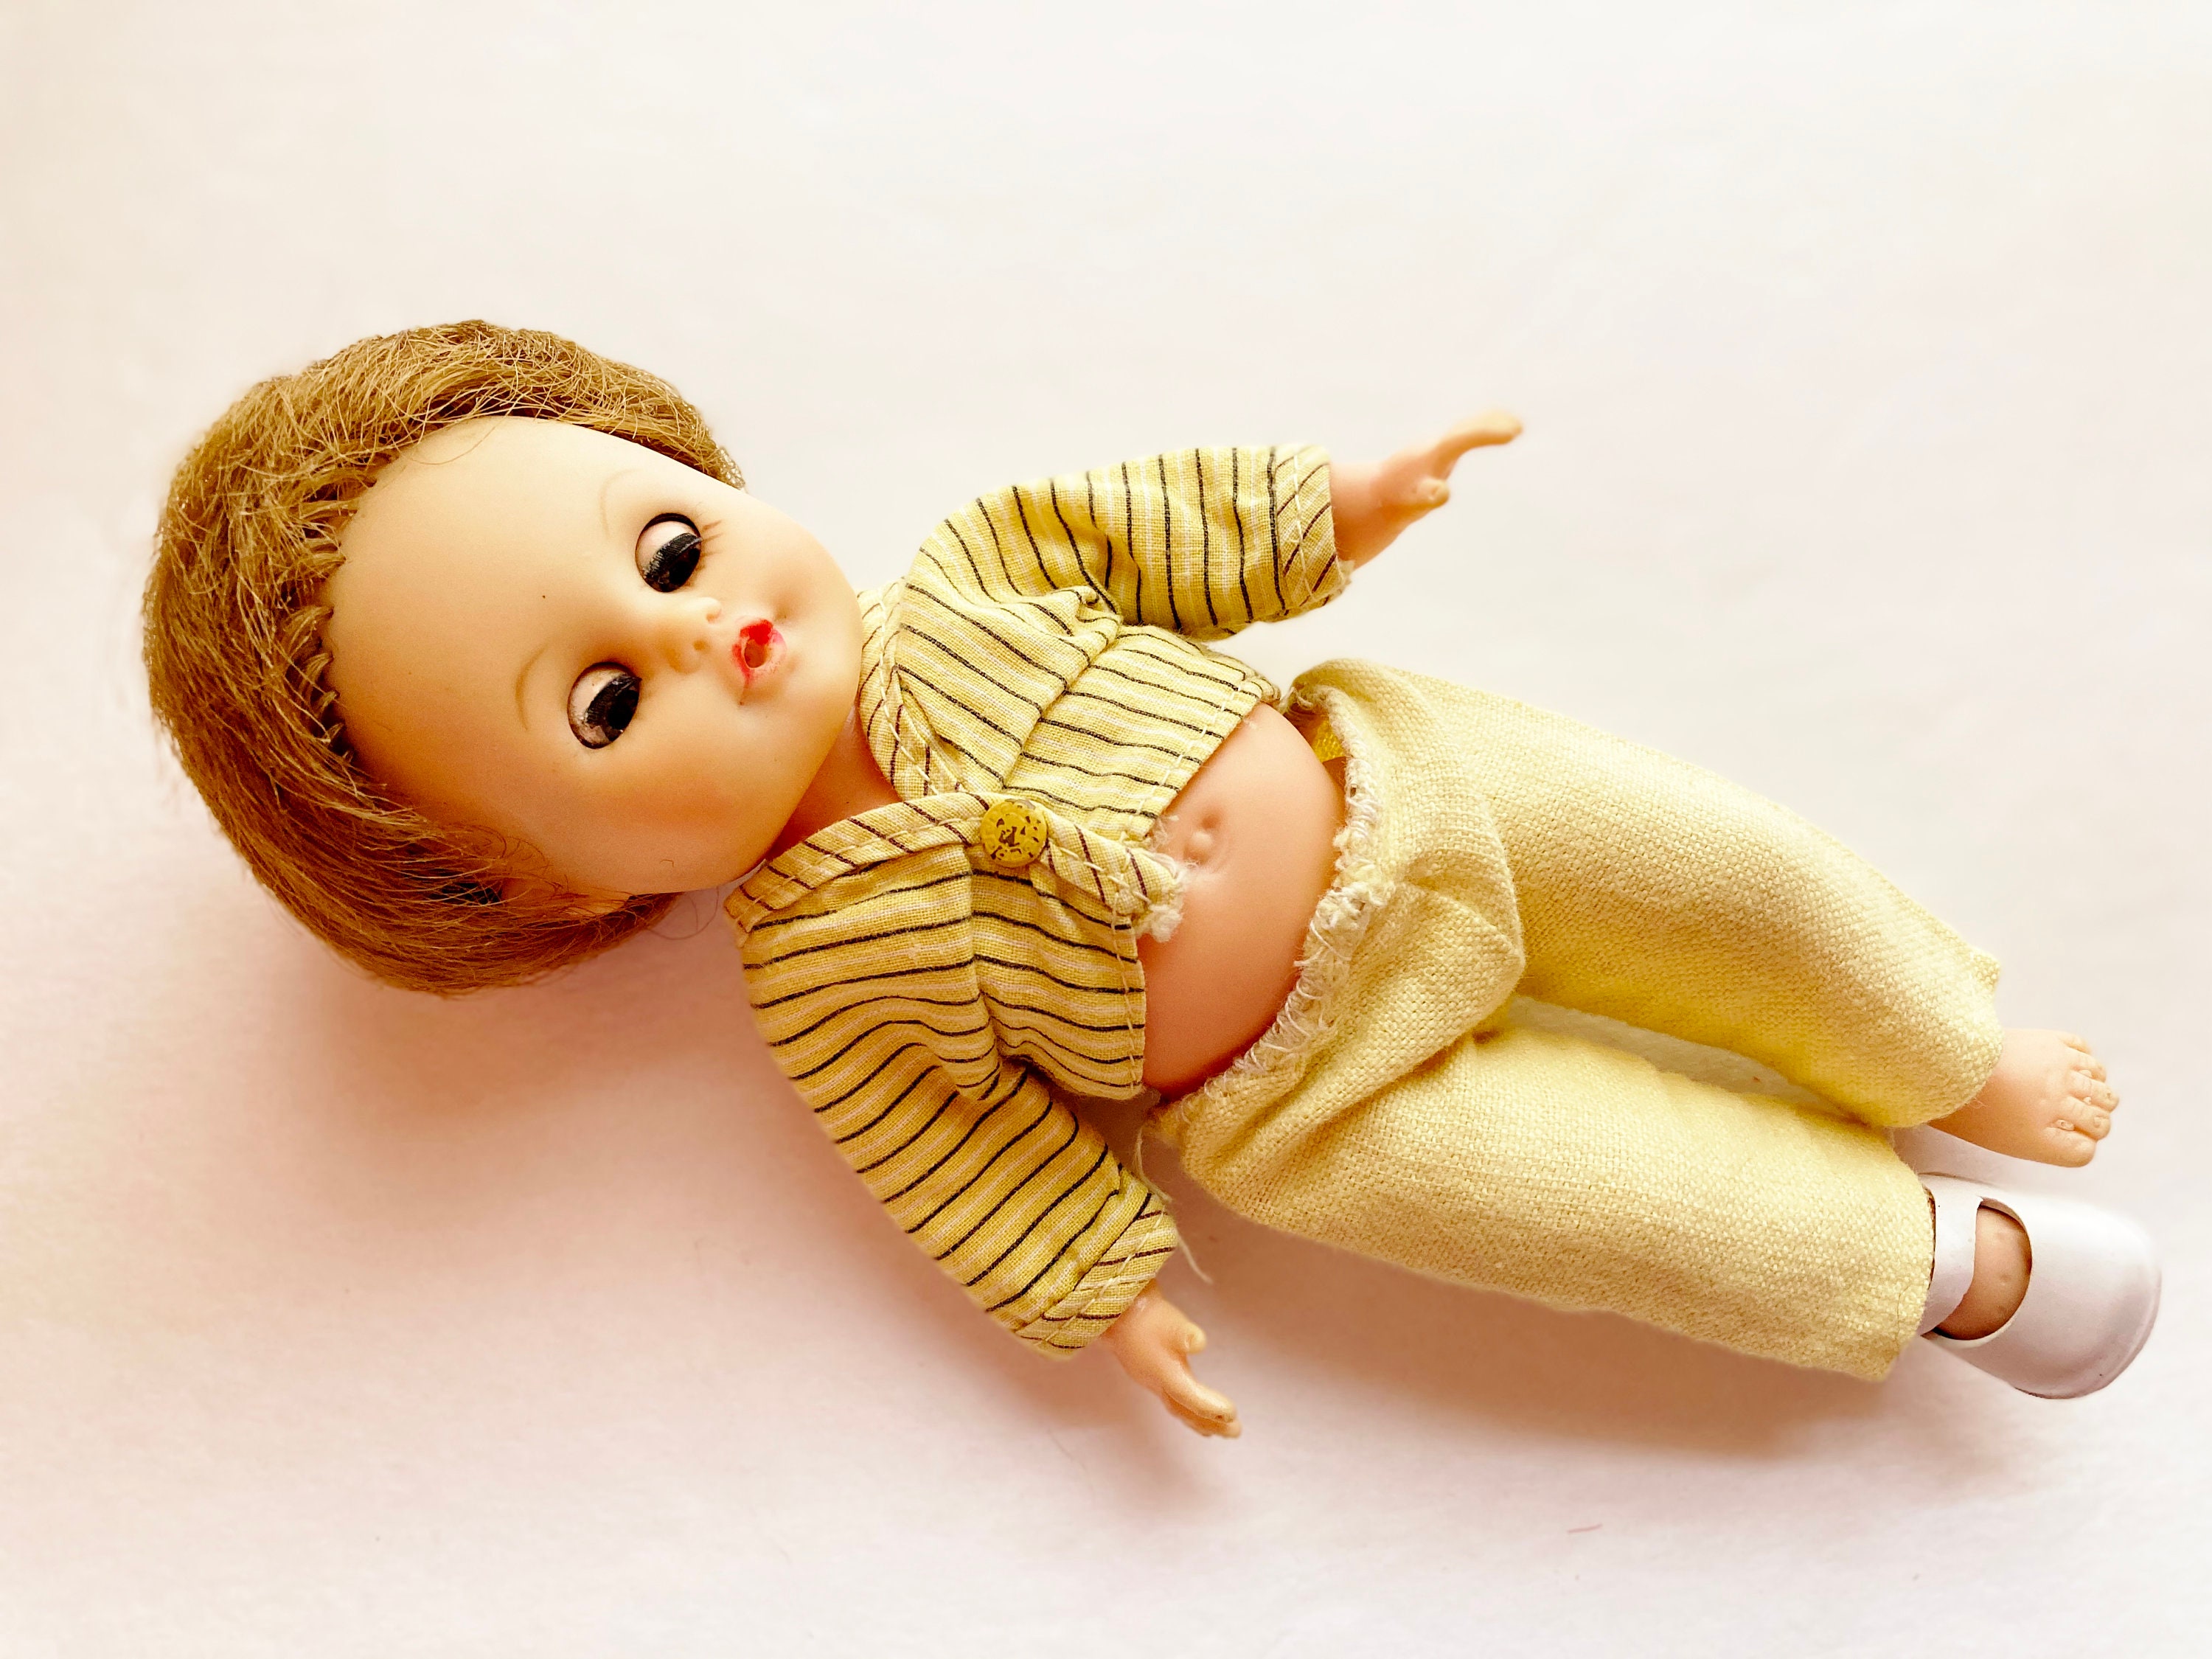 MINIATURE ASIAN BABY Person Plastic Figures Figurines Diorama